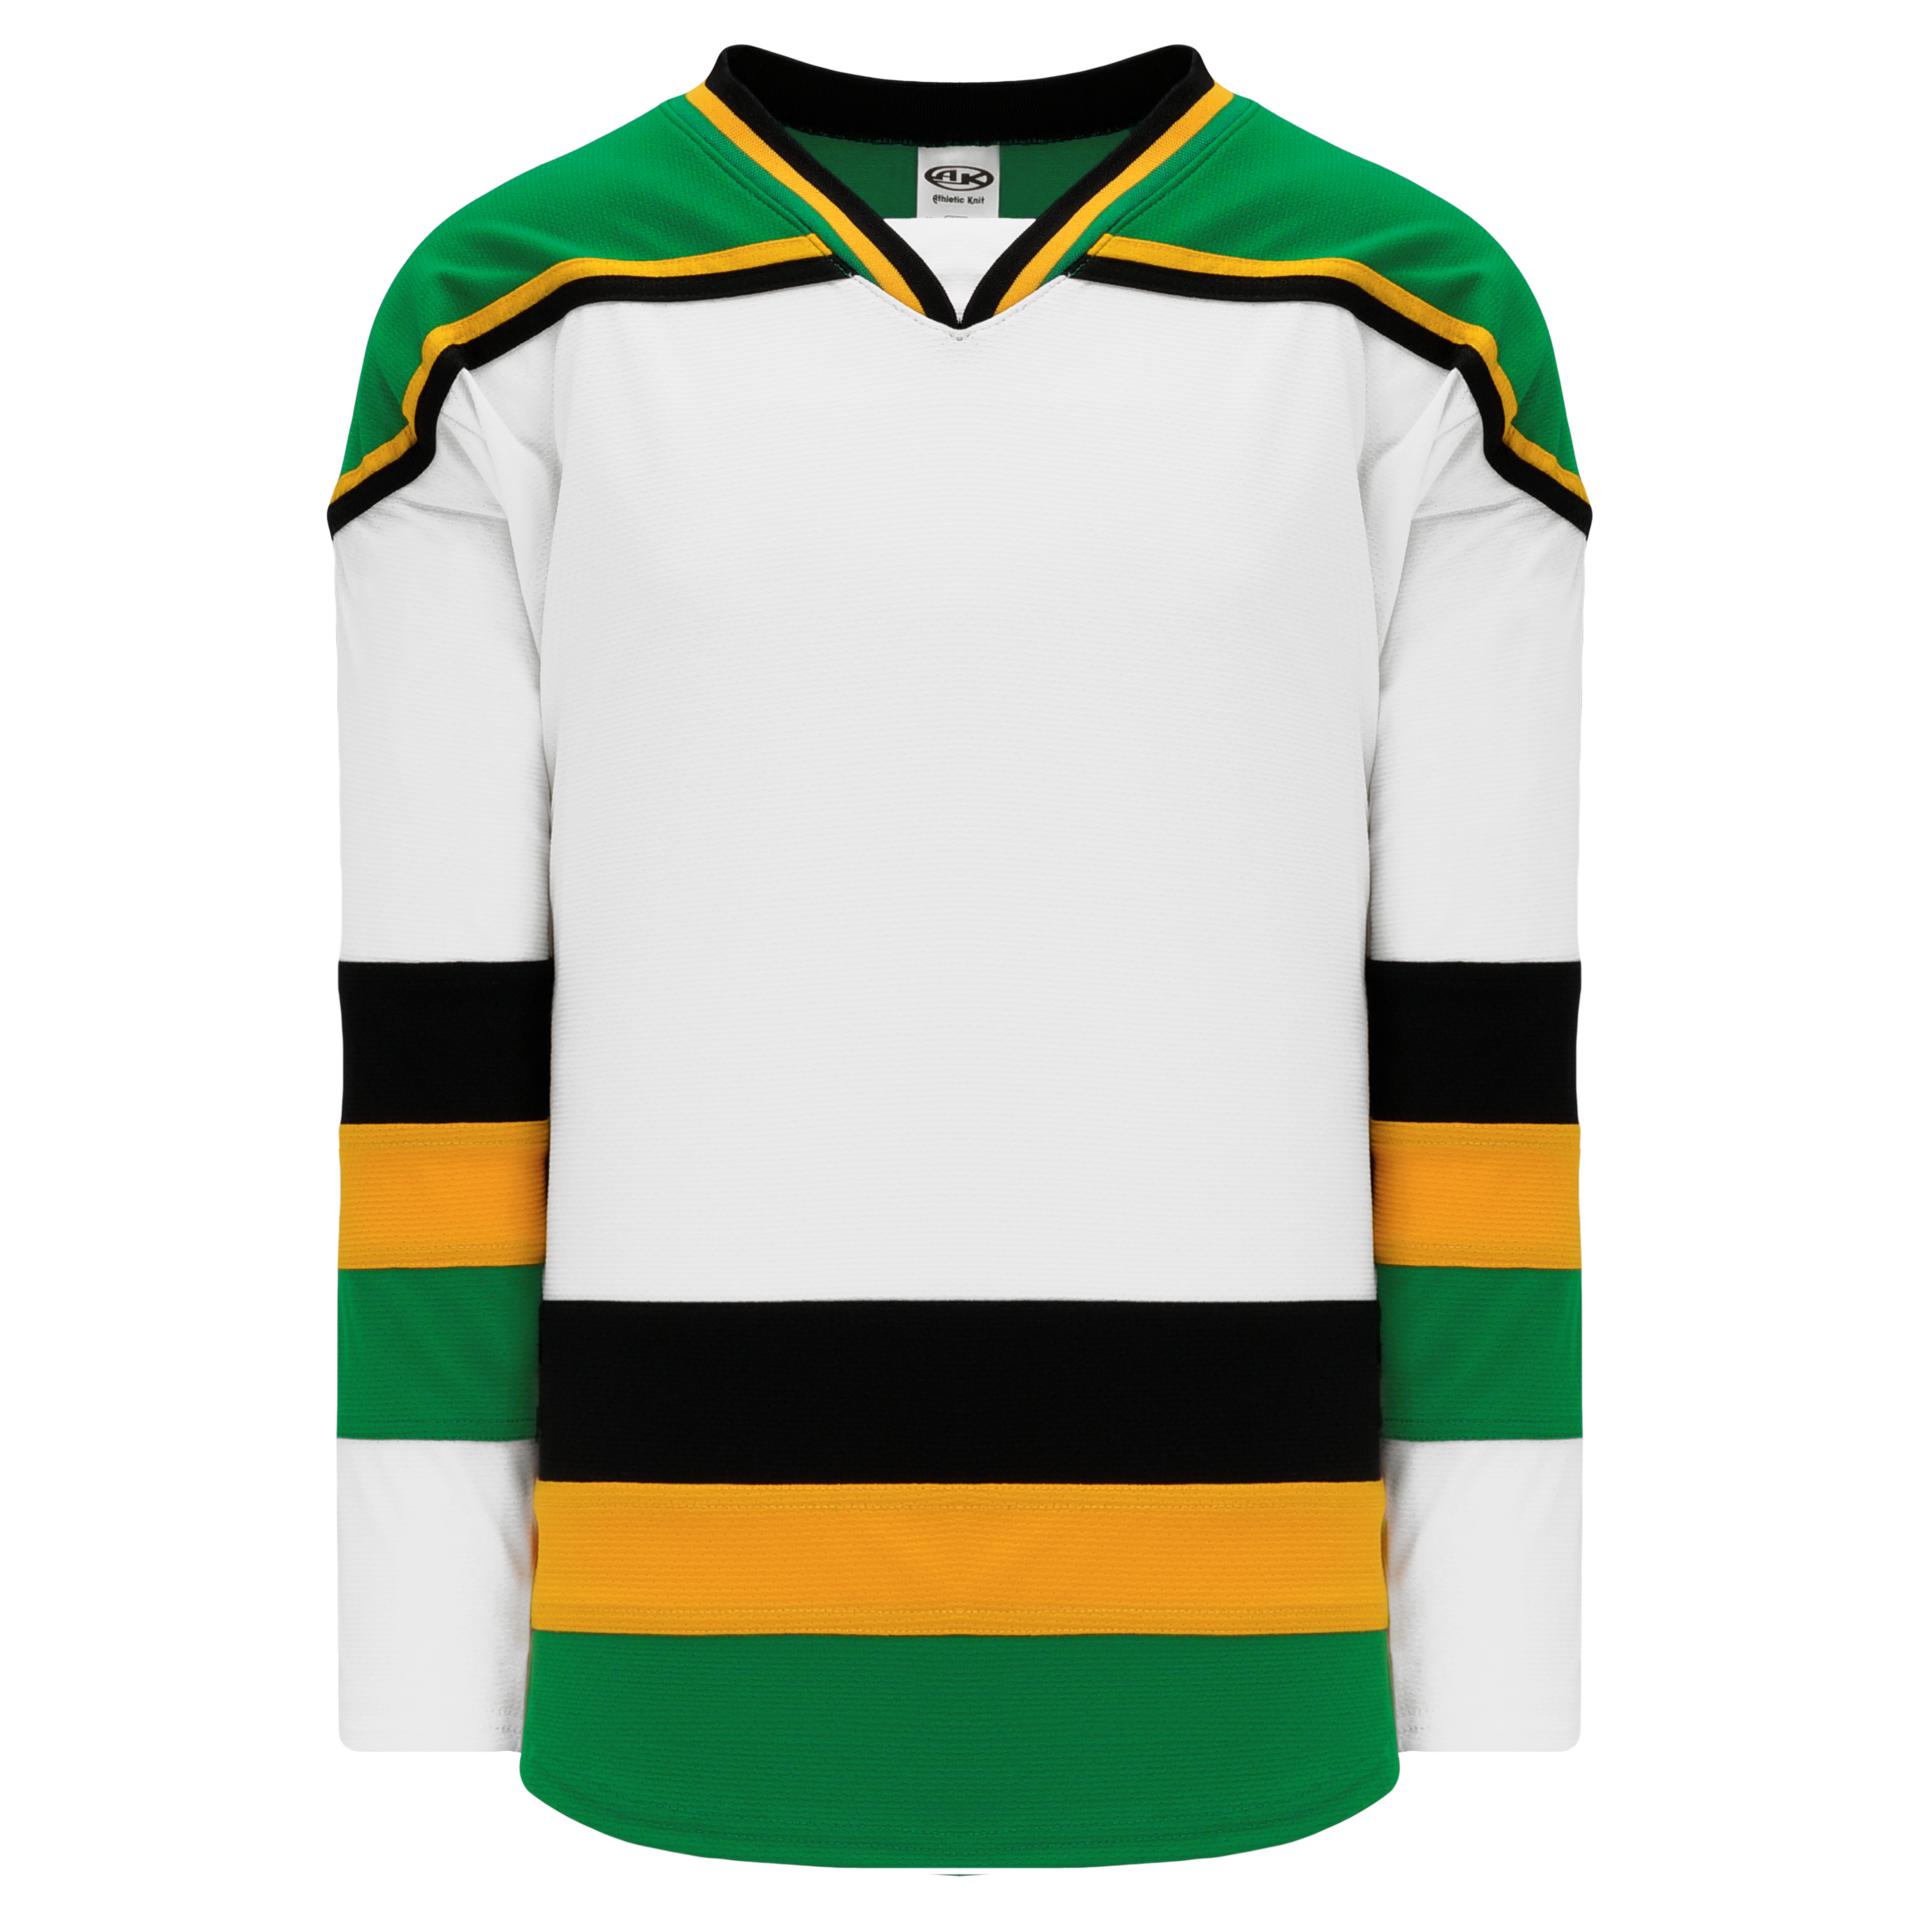 Minnesota North Stars Hockey Jerseys - NHL Custom Throwback Jerseys